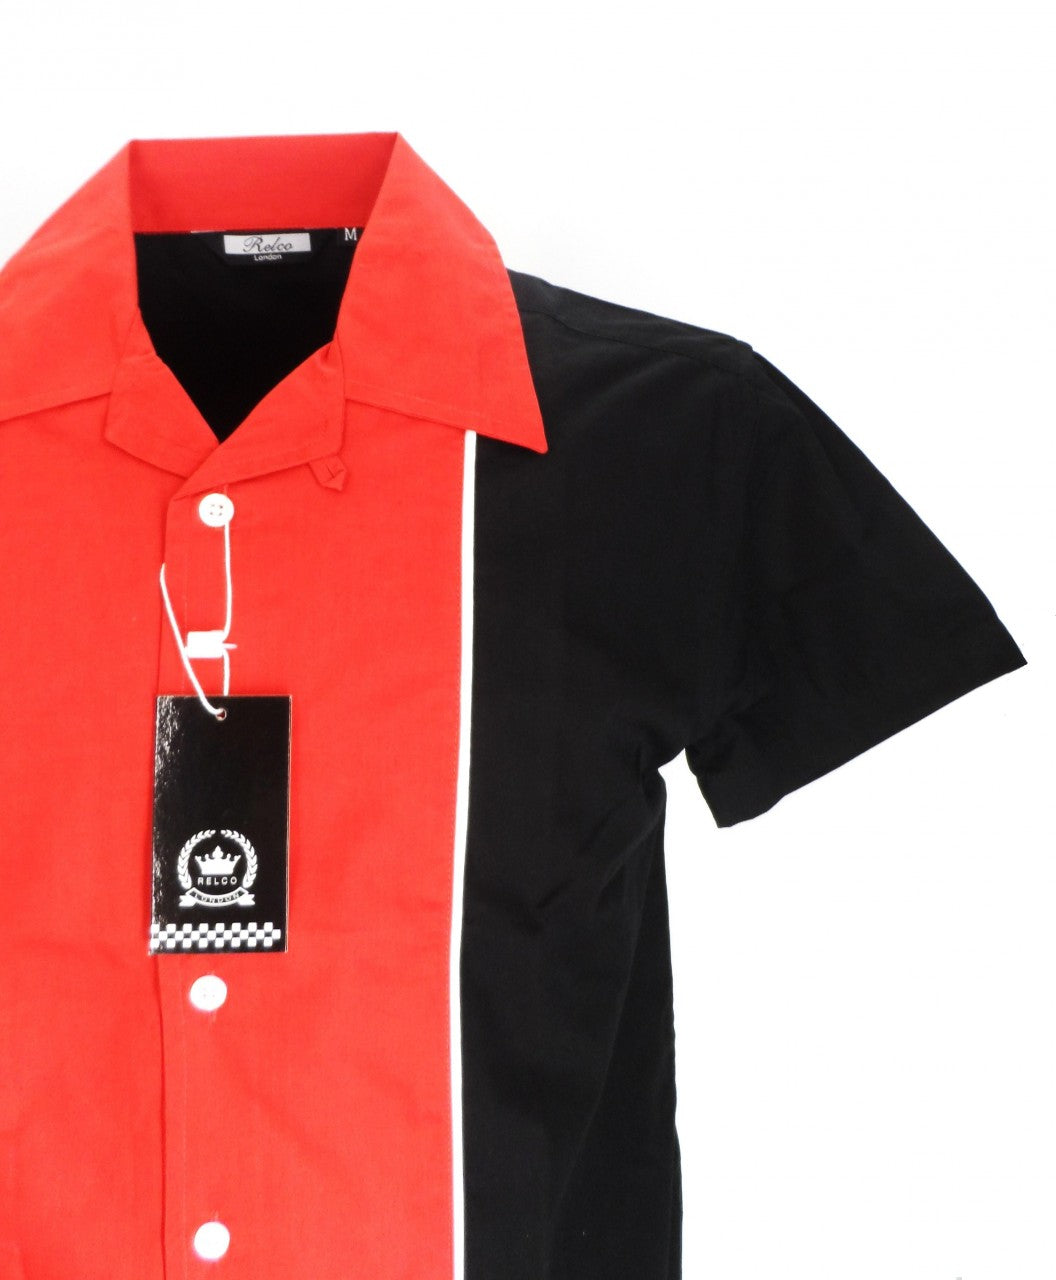 Rockabilly Bowling Black/Red shirts Vintage/retro Shirt